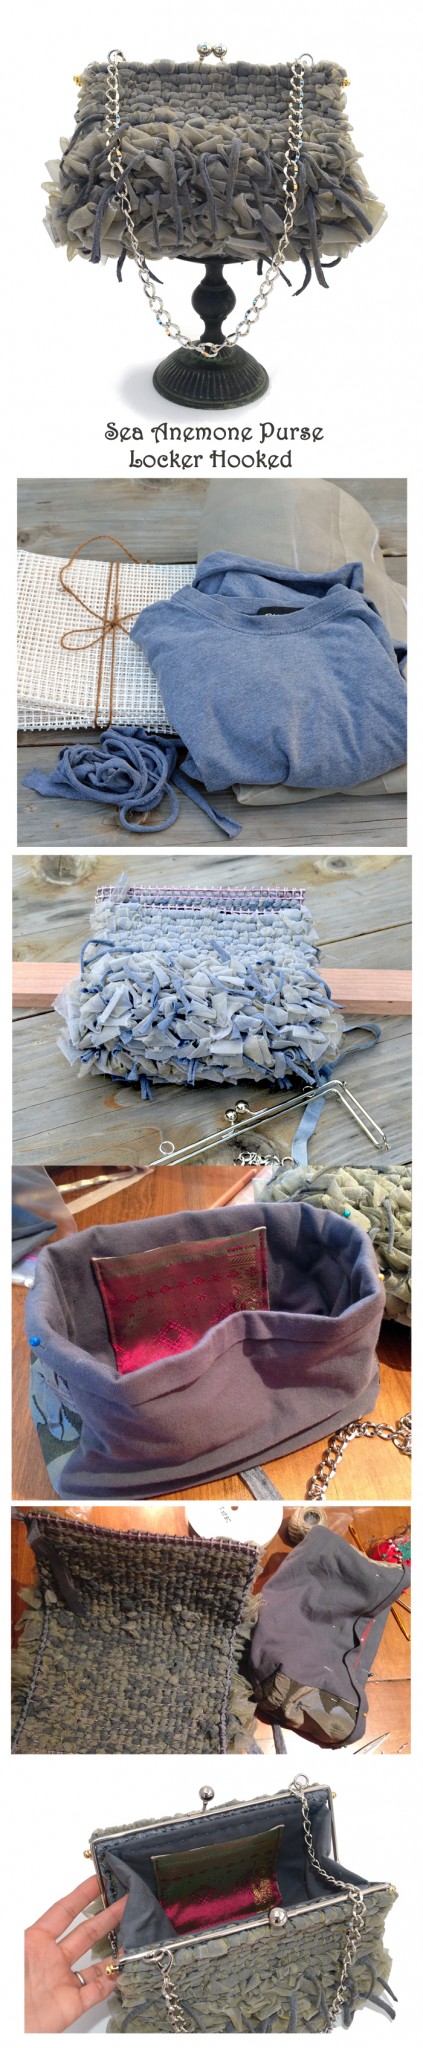 Creating the locker hooked Sea Anemone purse